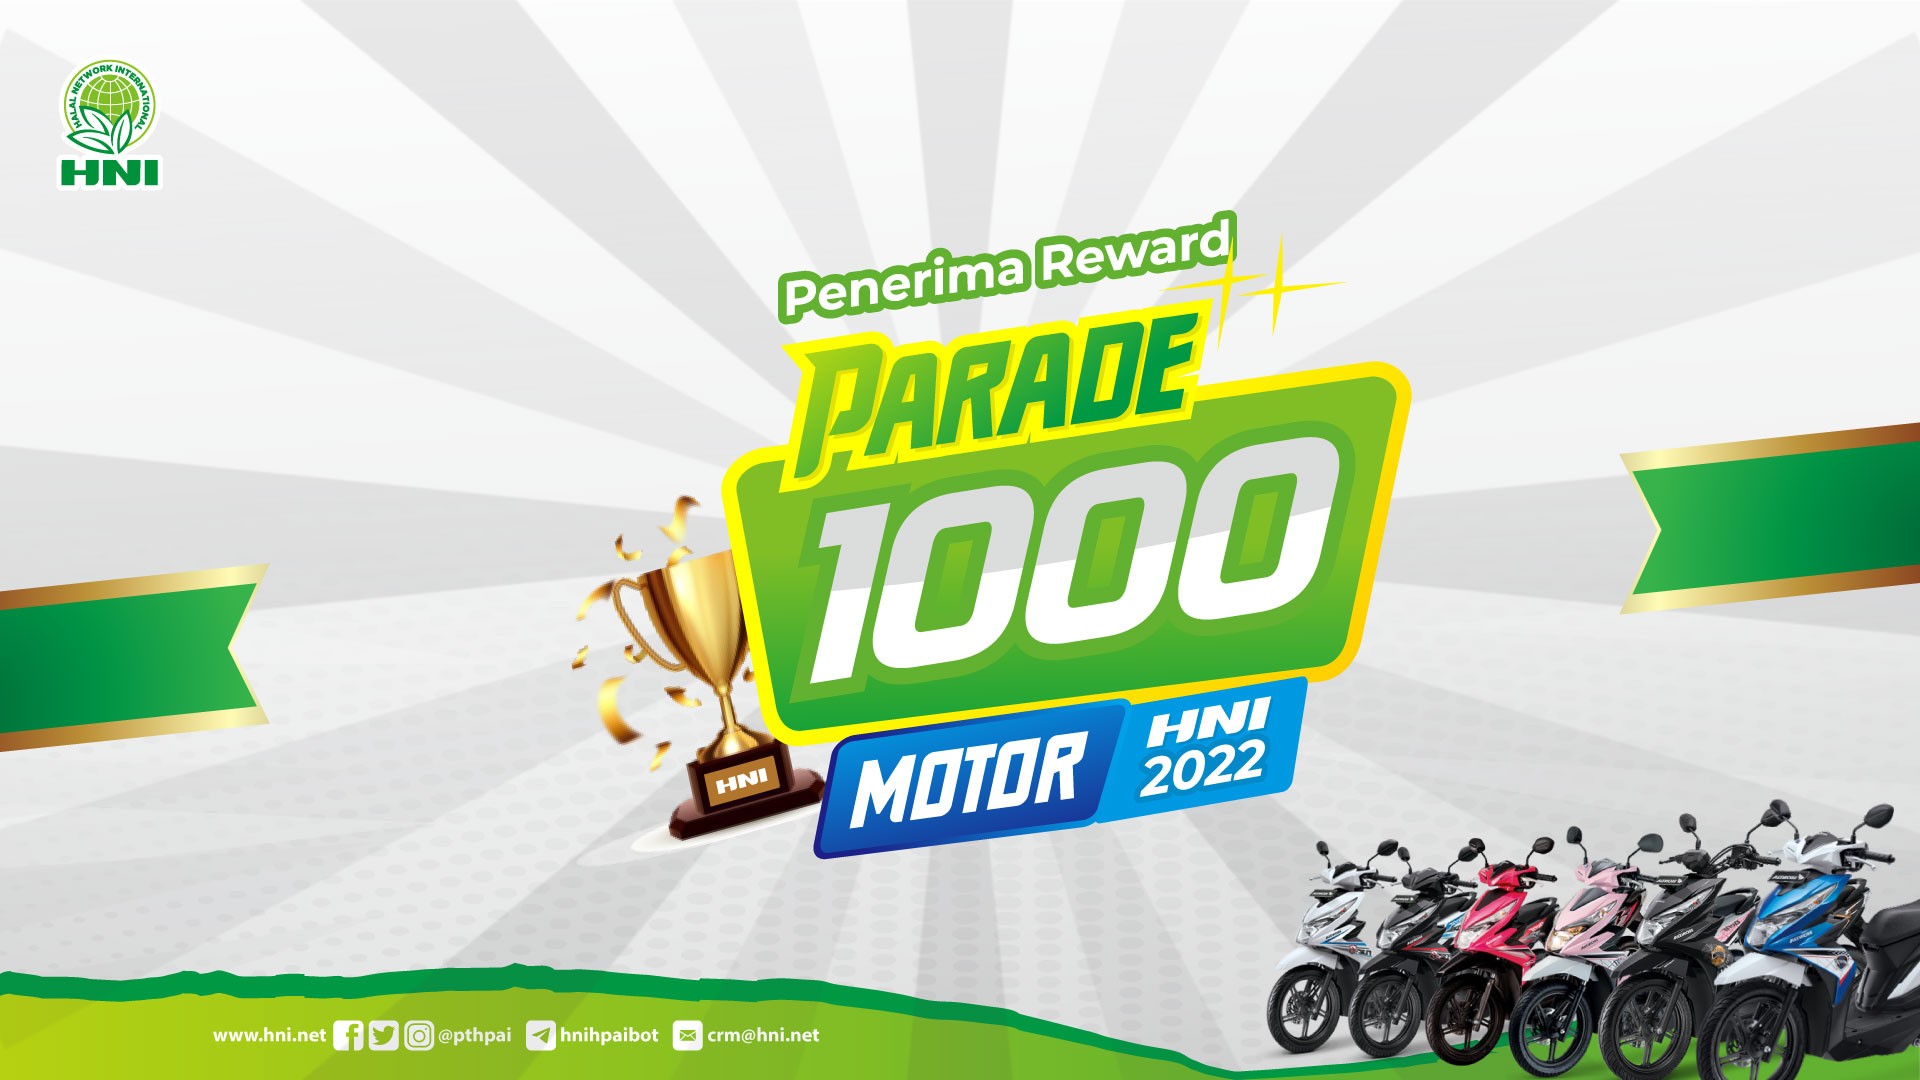 Penerima Reward Parade 1000 Motor 2022